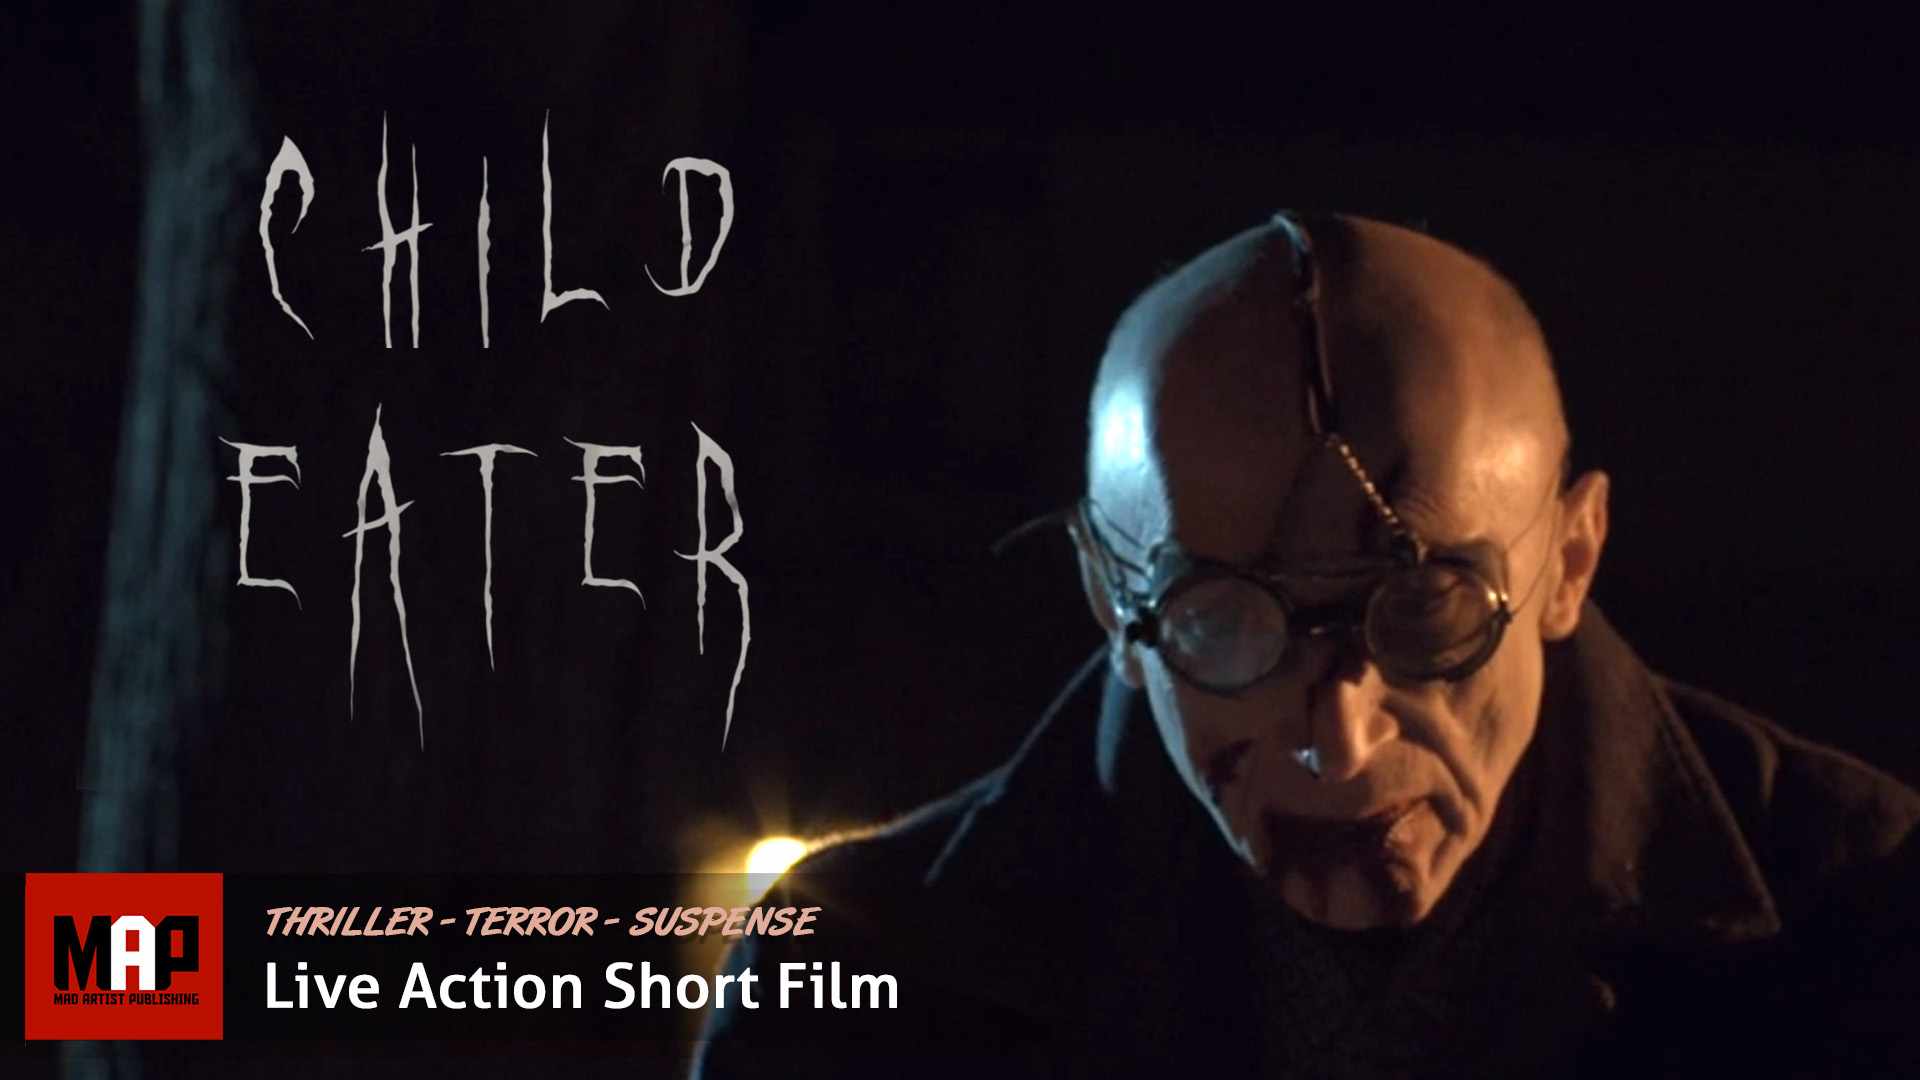 Suspense Thriller ** THE CHILD EATER ** Award Winning Film By Erlingur Óttar Thoroddsen